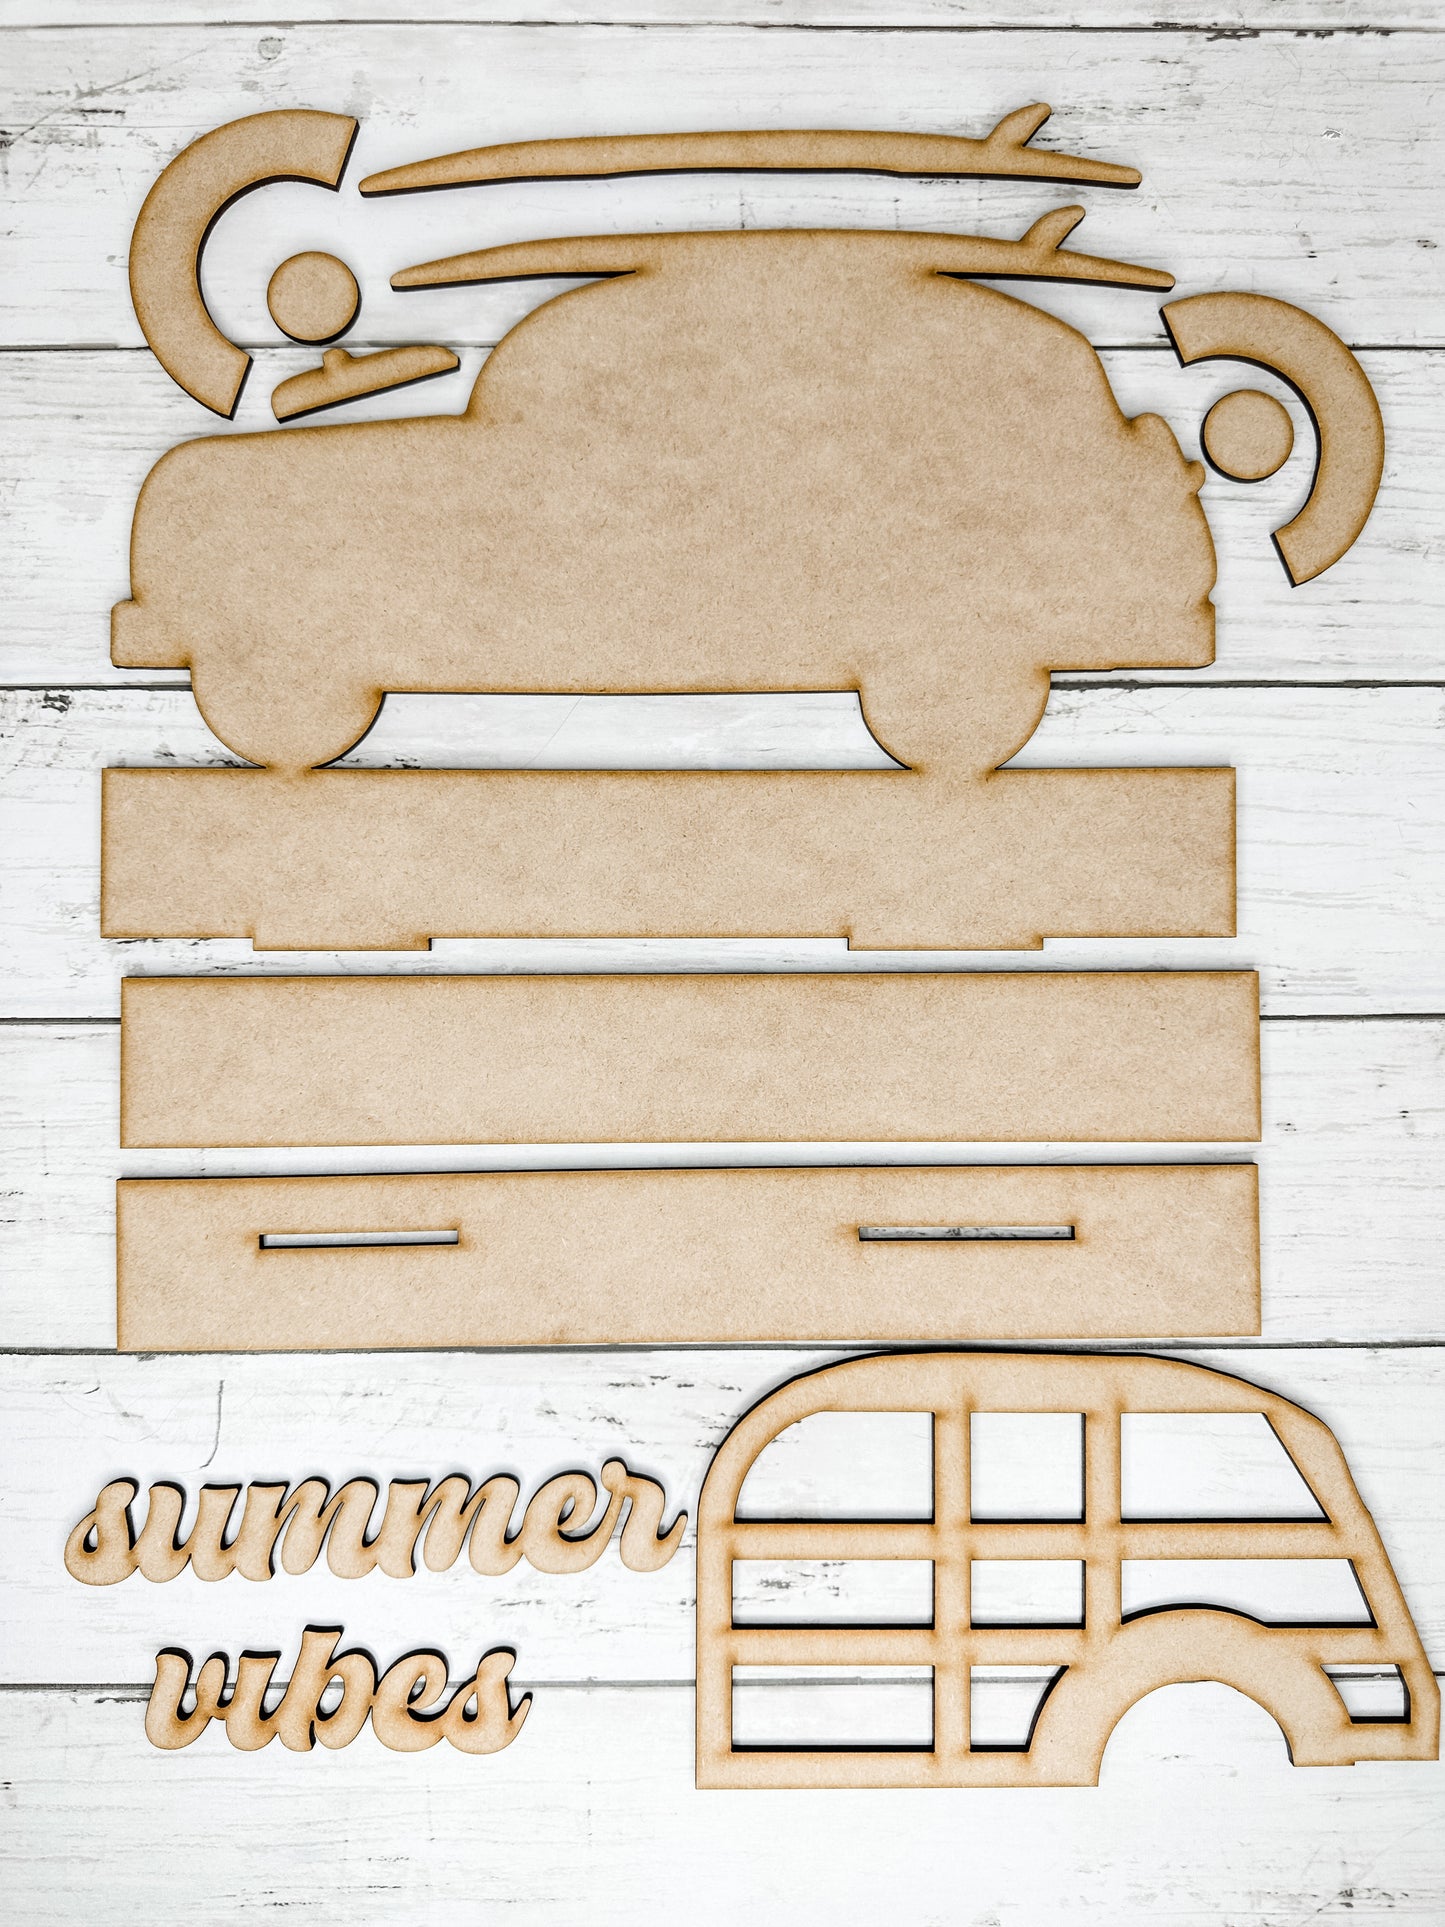 Summer Vibes Woodie Wagon DIY Kit